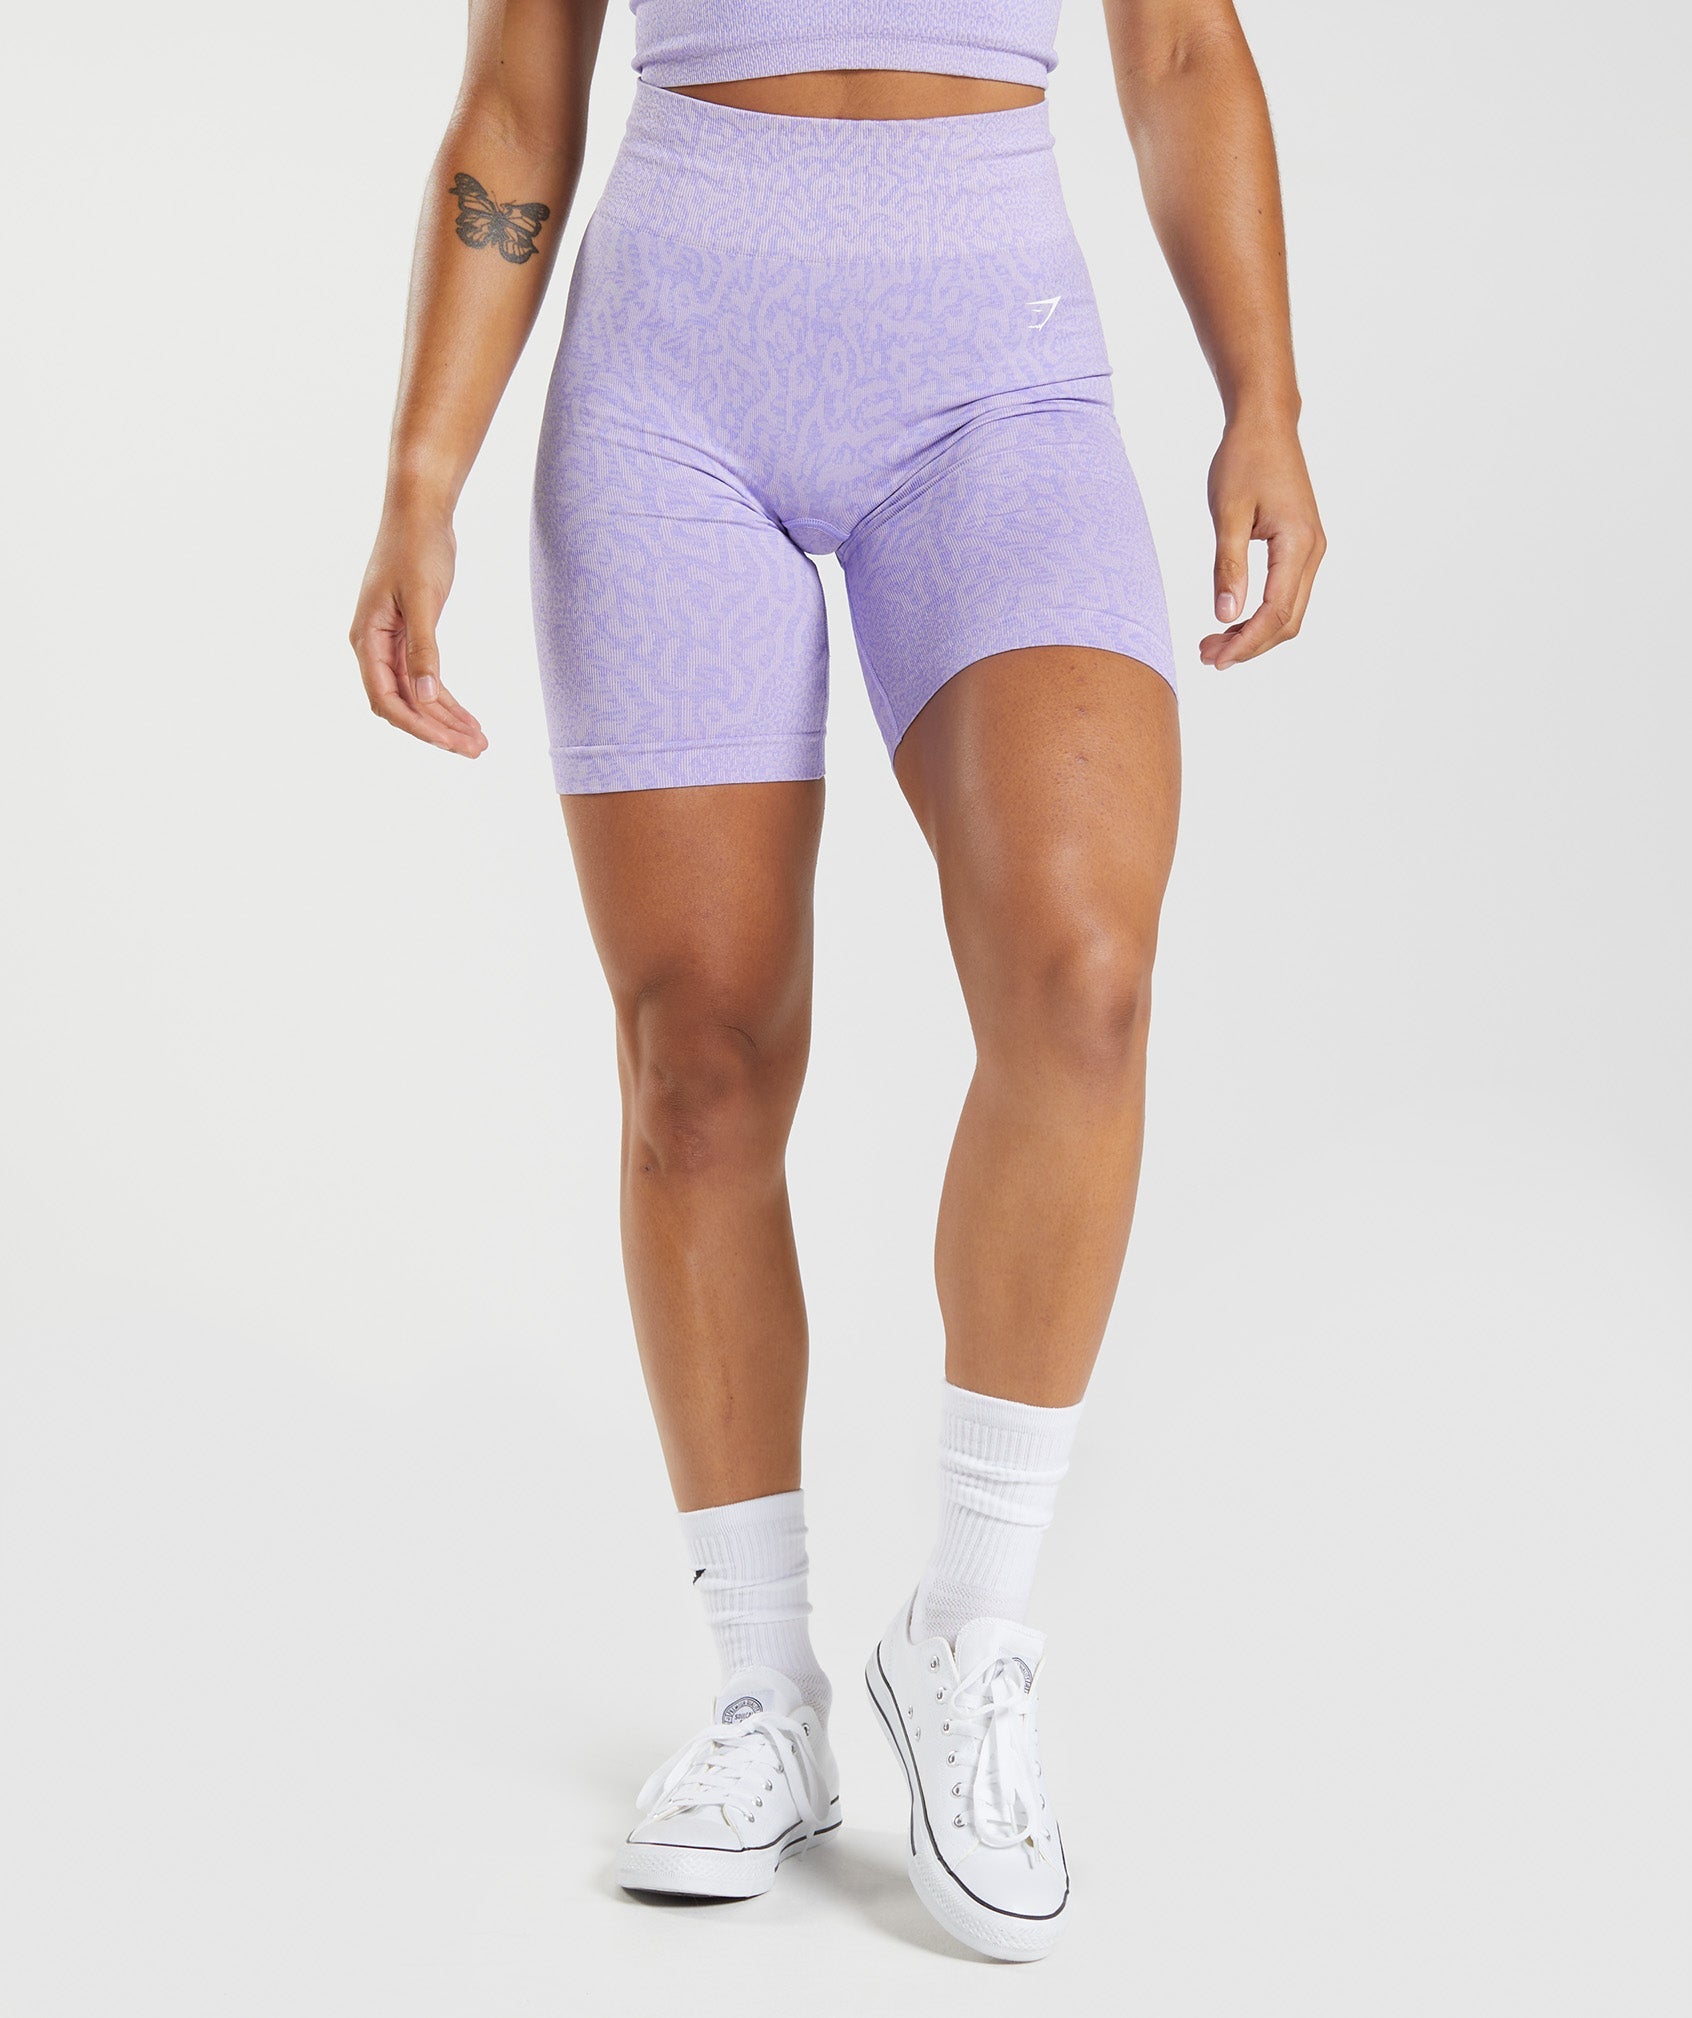 Gymshark Adapt Camo Biker Shorts - $22 (54% Off Retail) - From Bailey